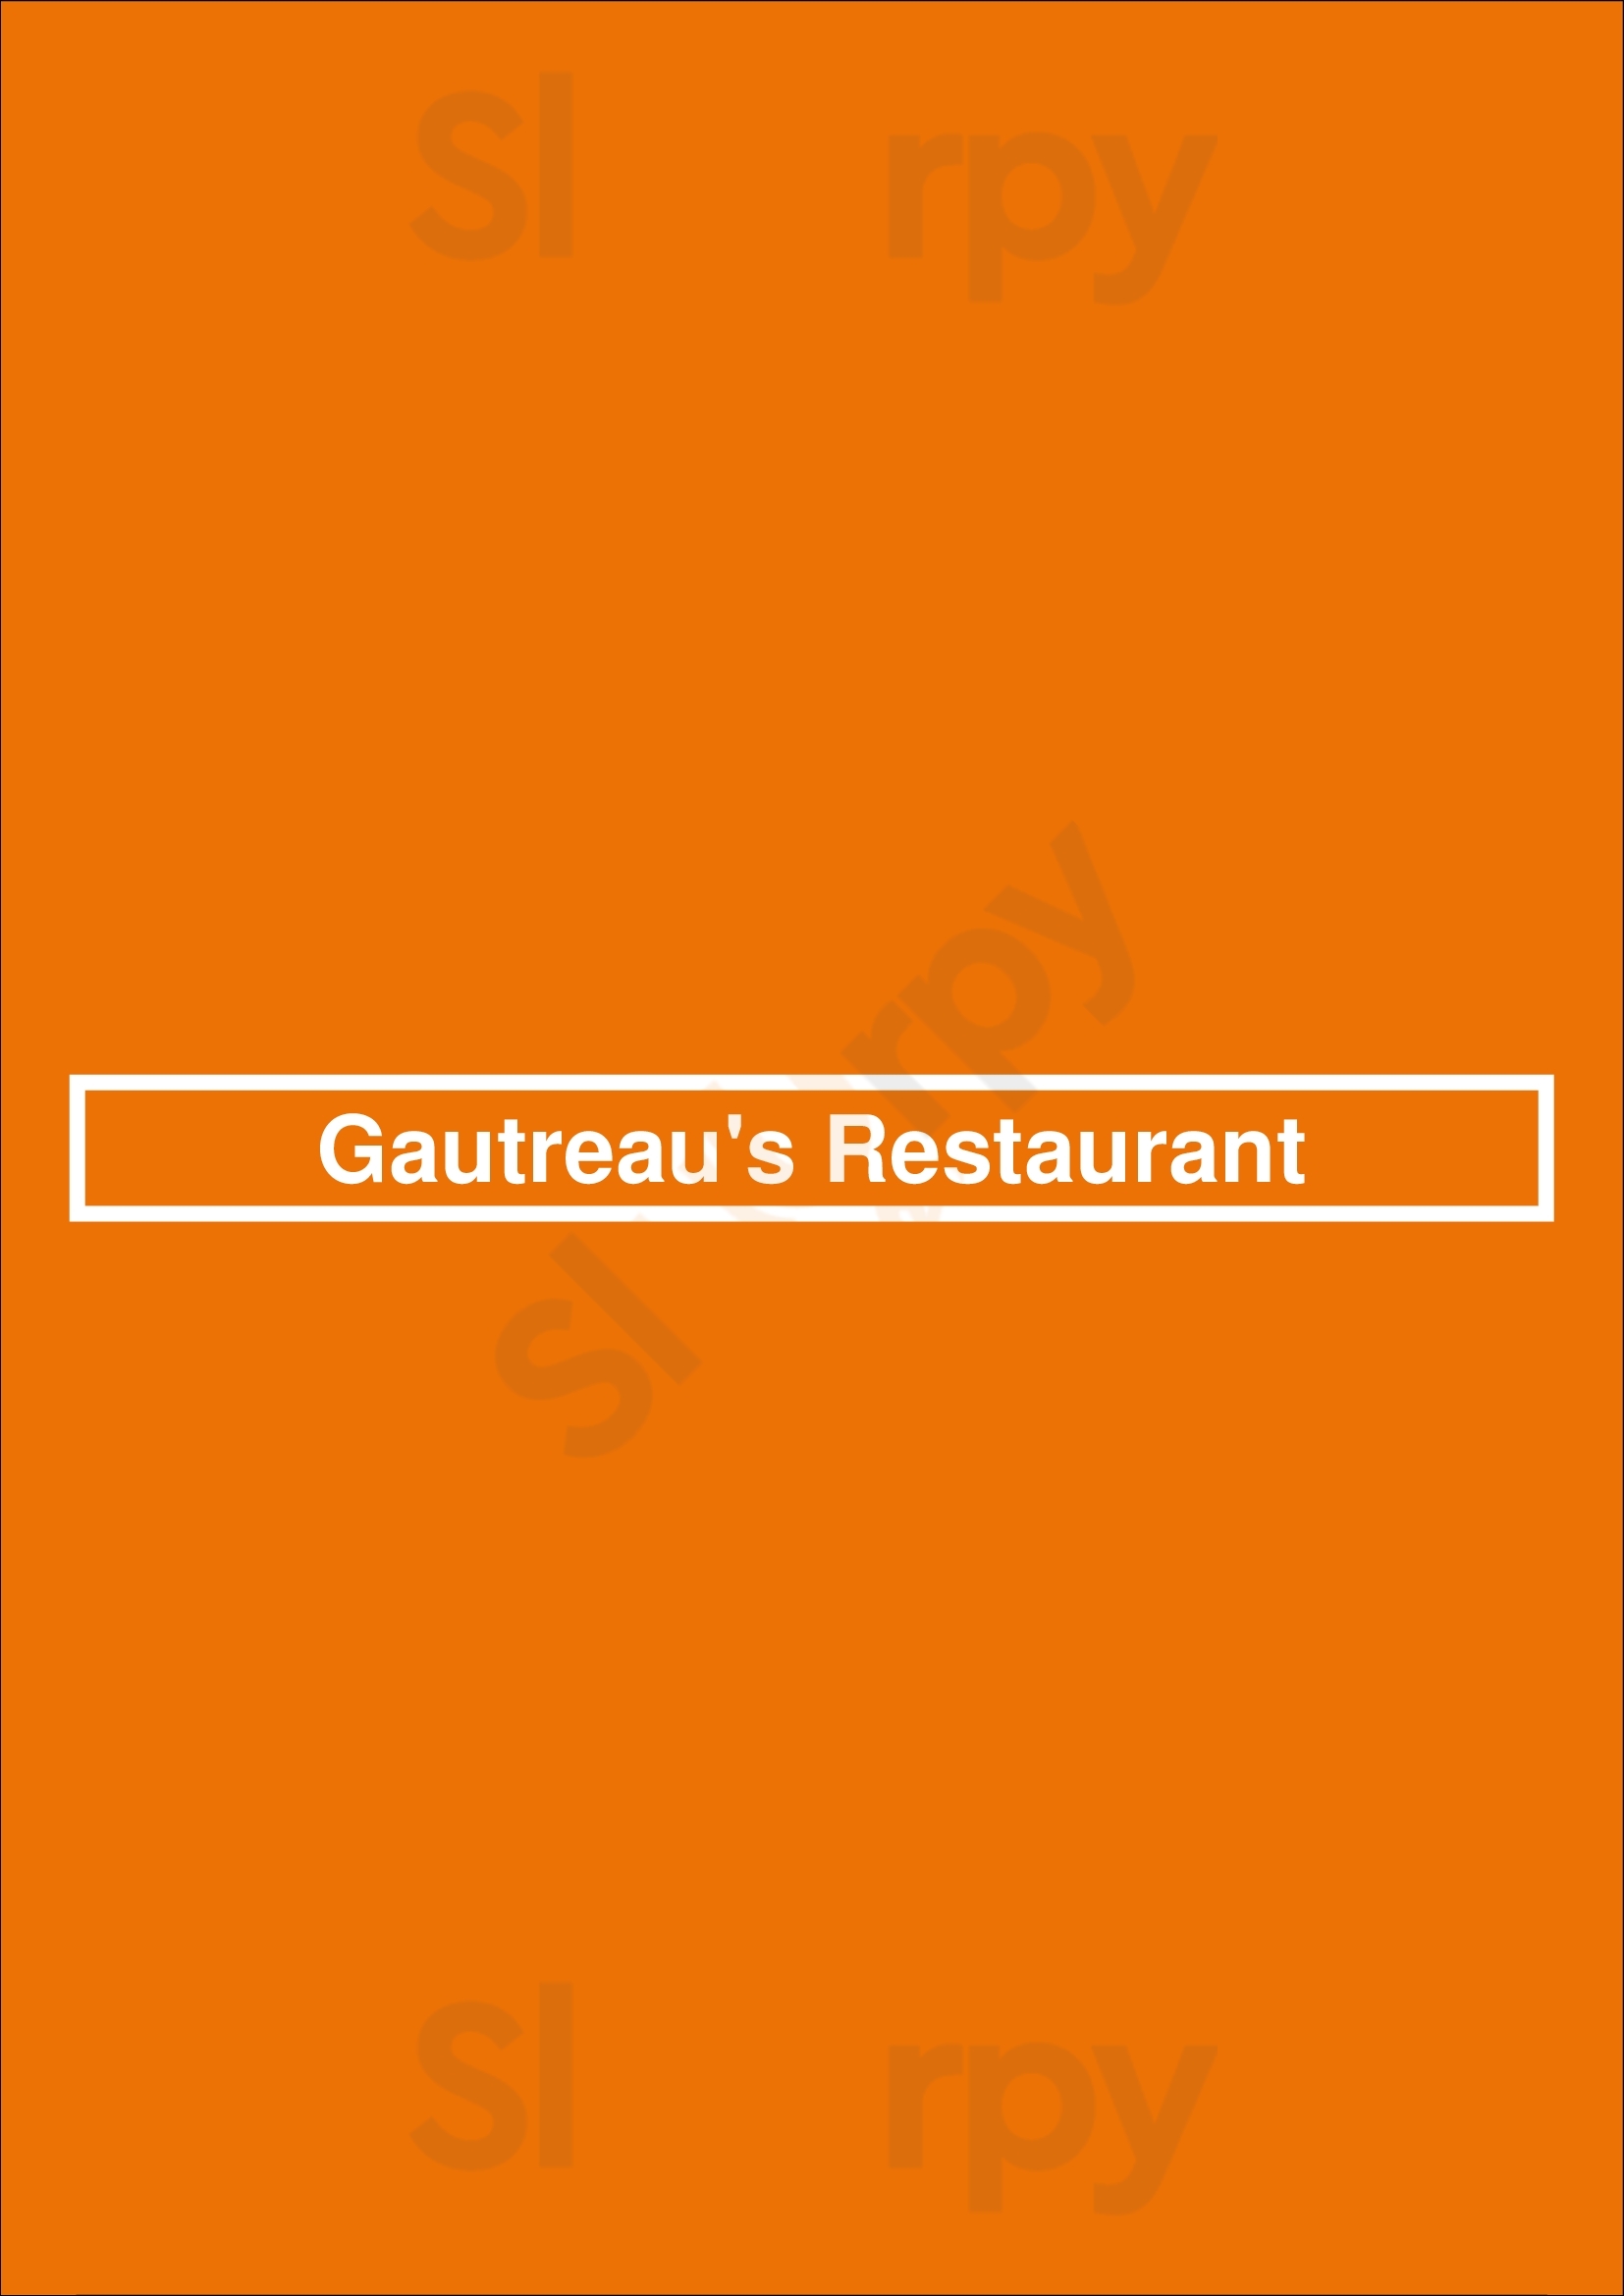 Gautreau's Restaurant New Orleans Menu - 1